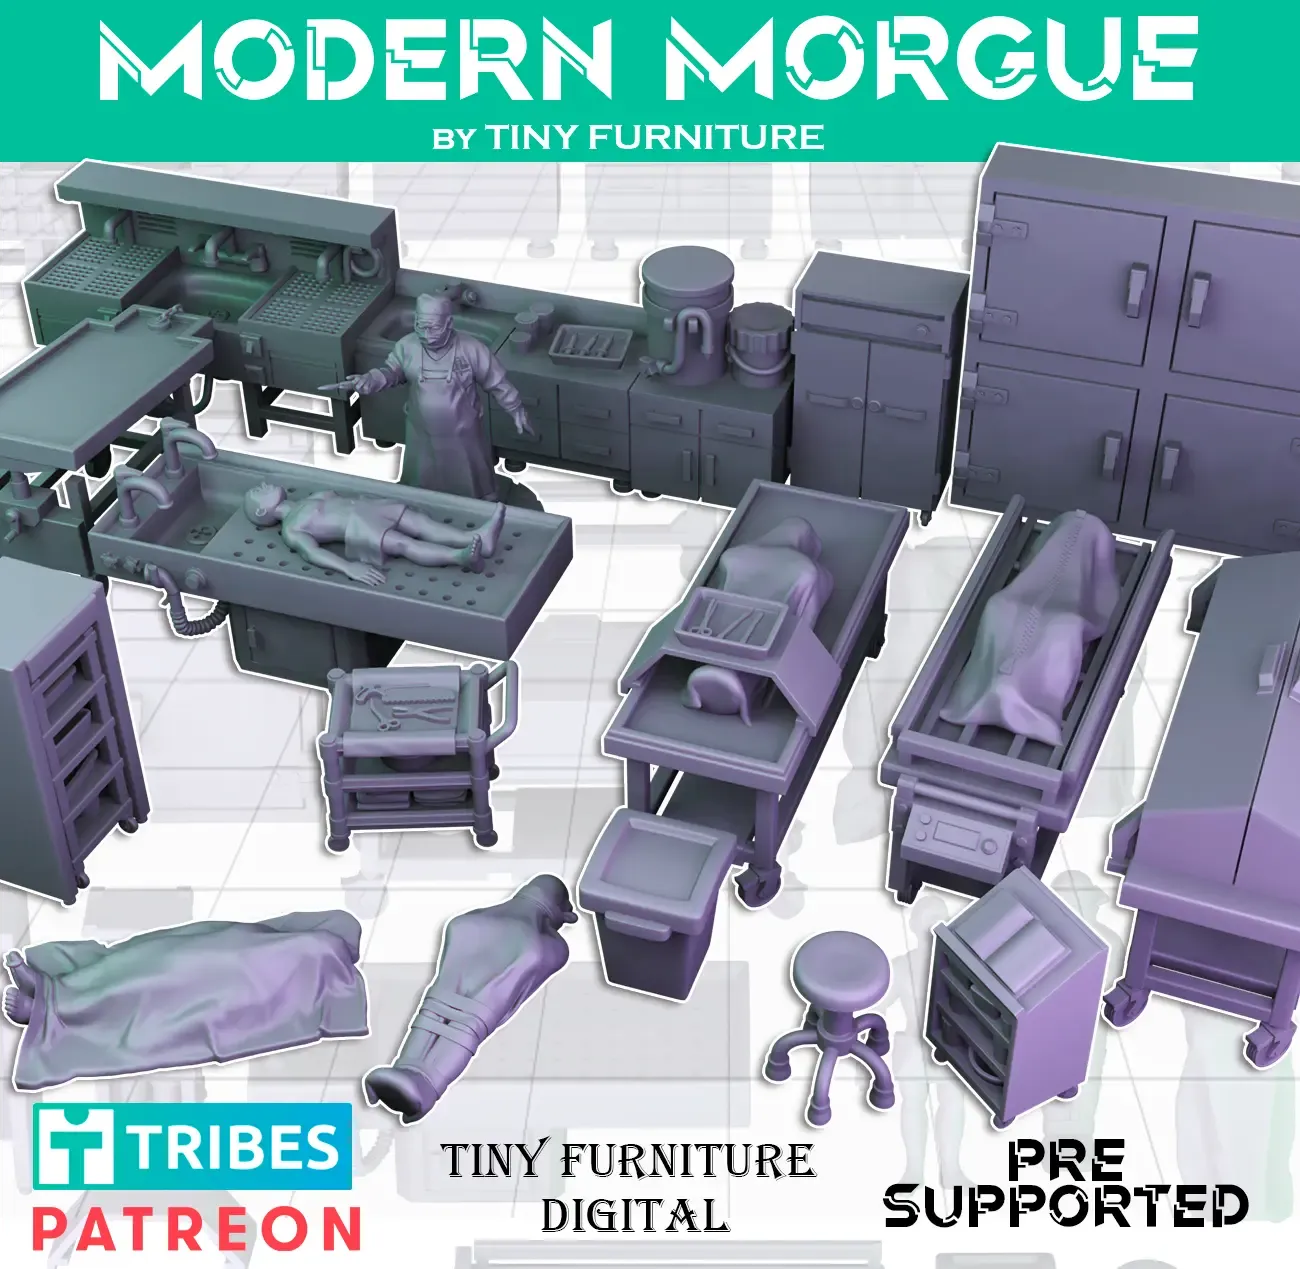 Modern Morgue